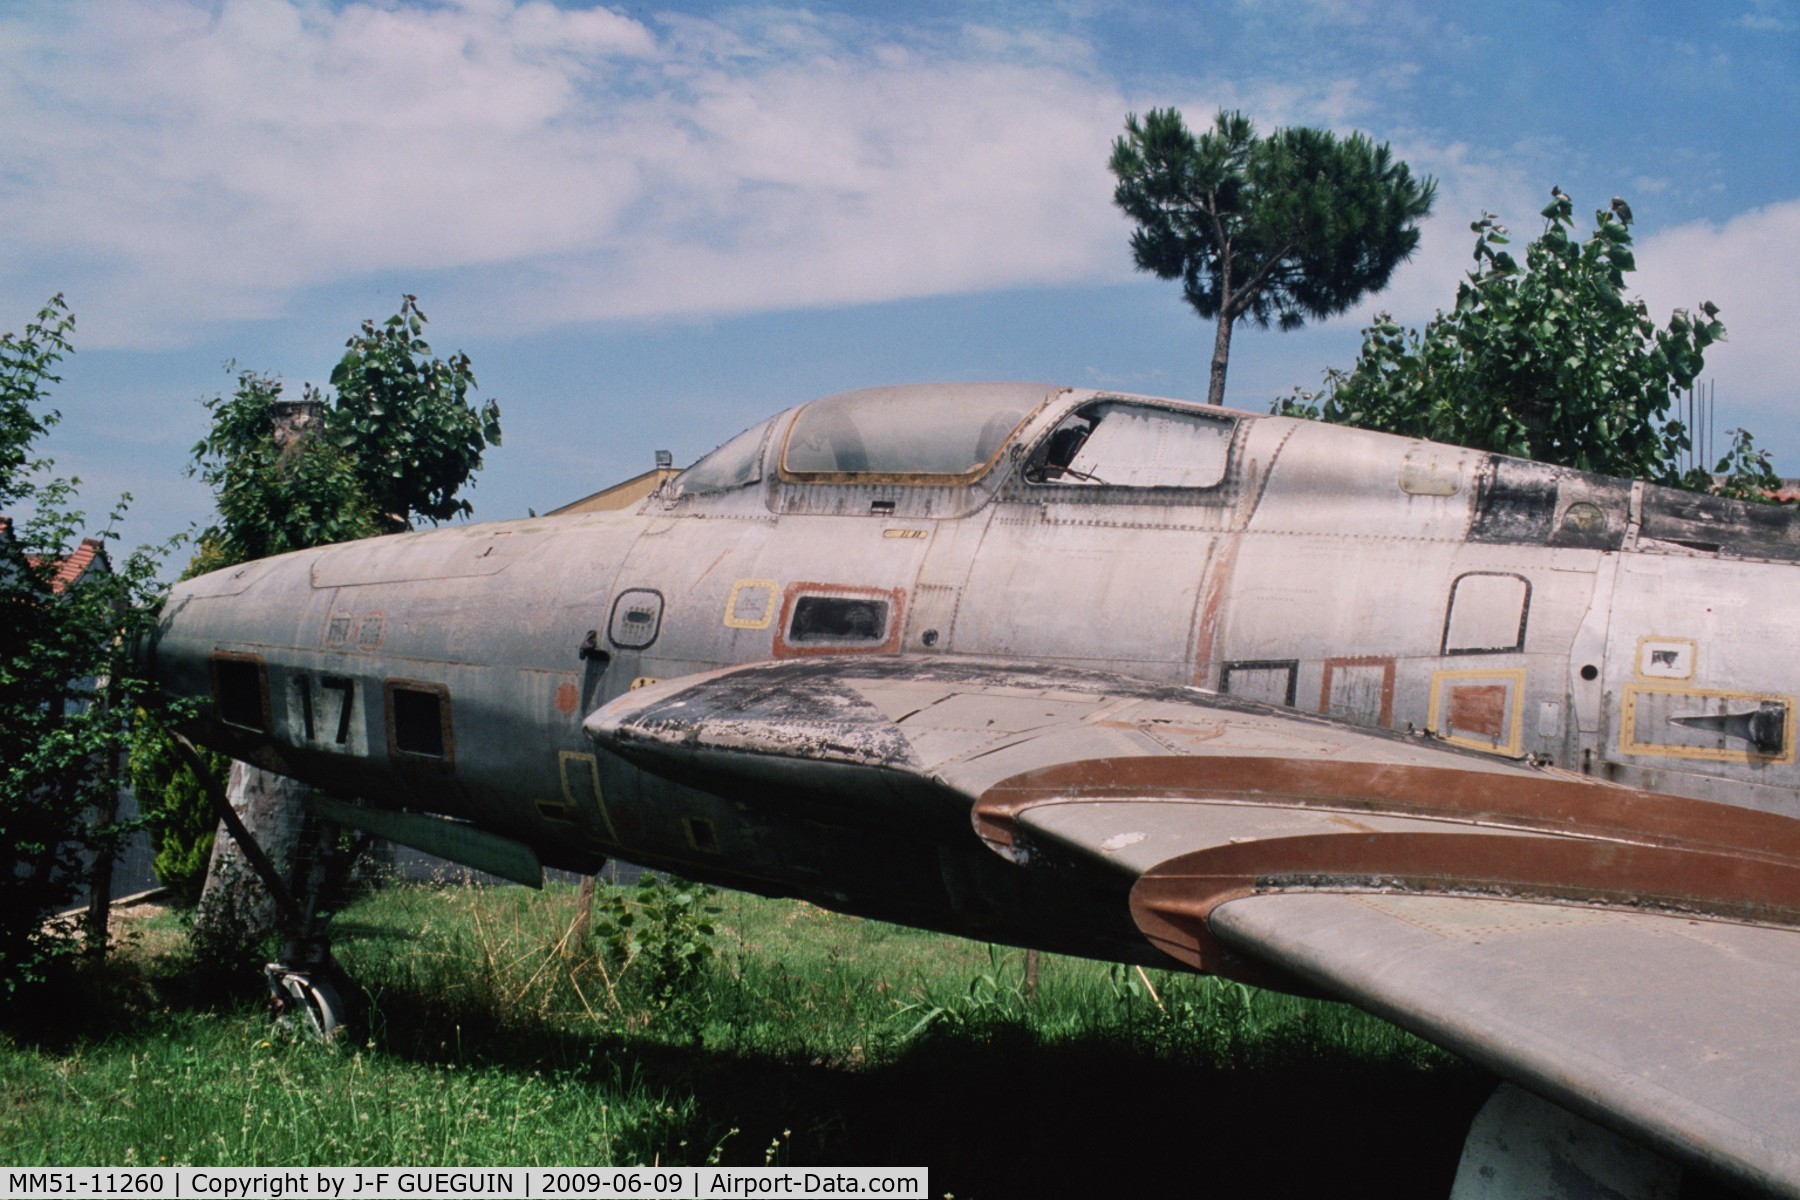 MM51-11260, Republic RF-84F-15-RE Thunderflash C/N 141, On display in Parco Ditellandia, Castel Volturno, Italy.